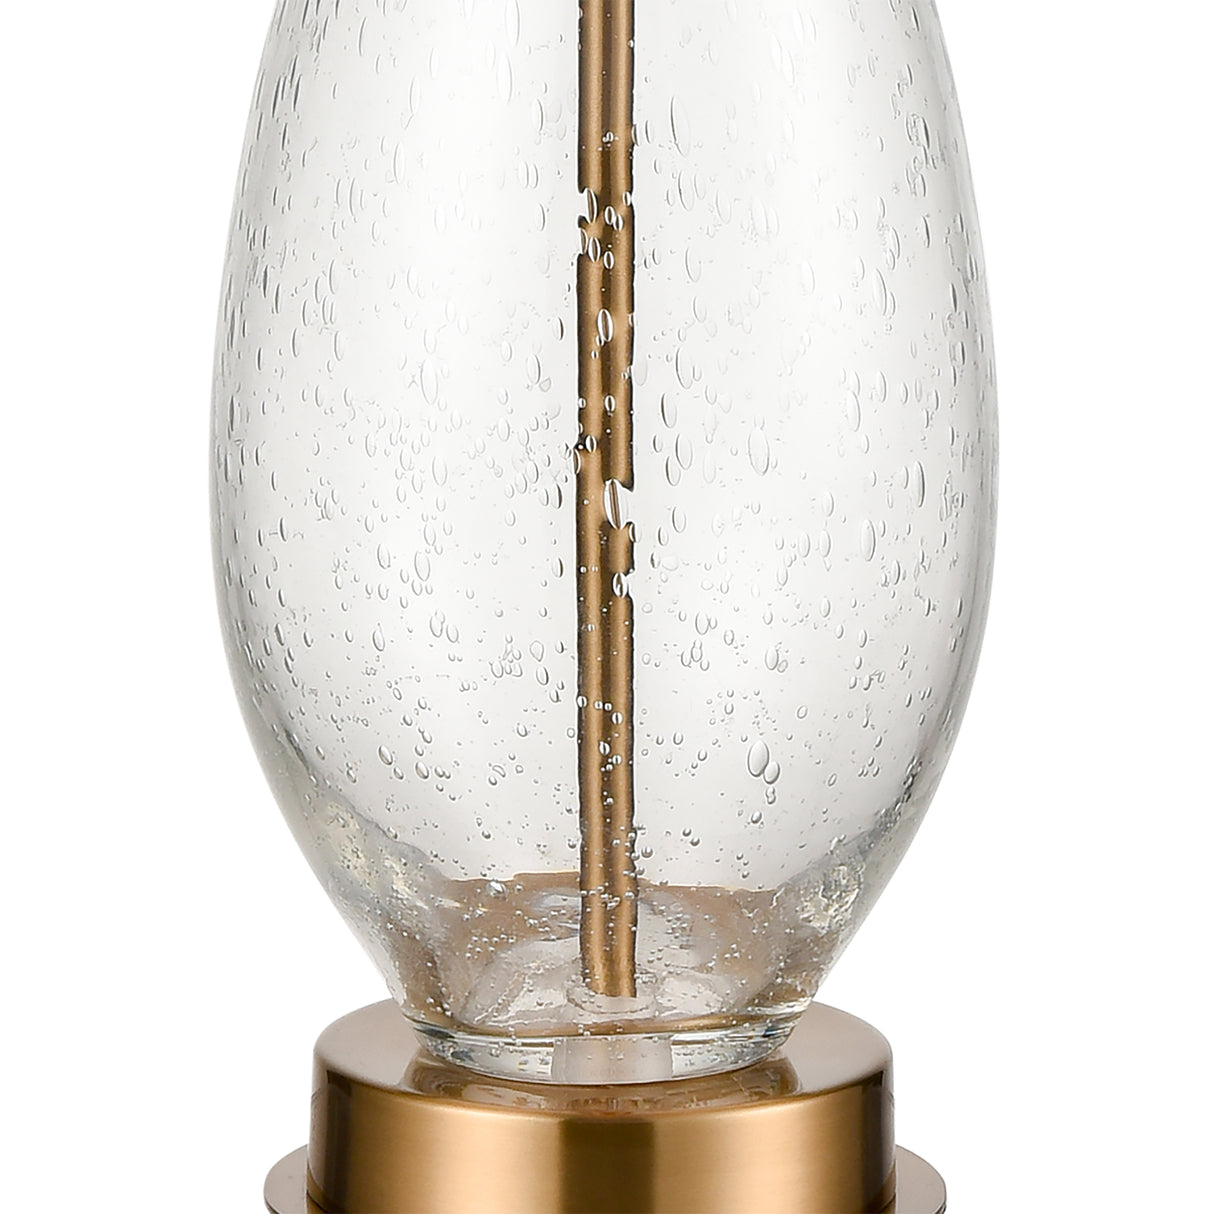 Elk D4670 Chepstow 36'' High 1-Light Table Lamp - Clear